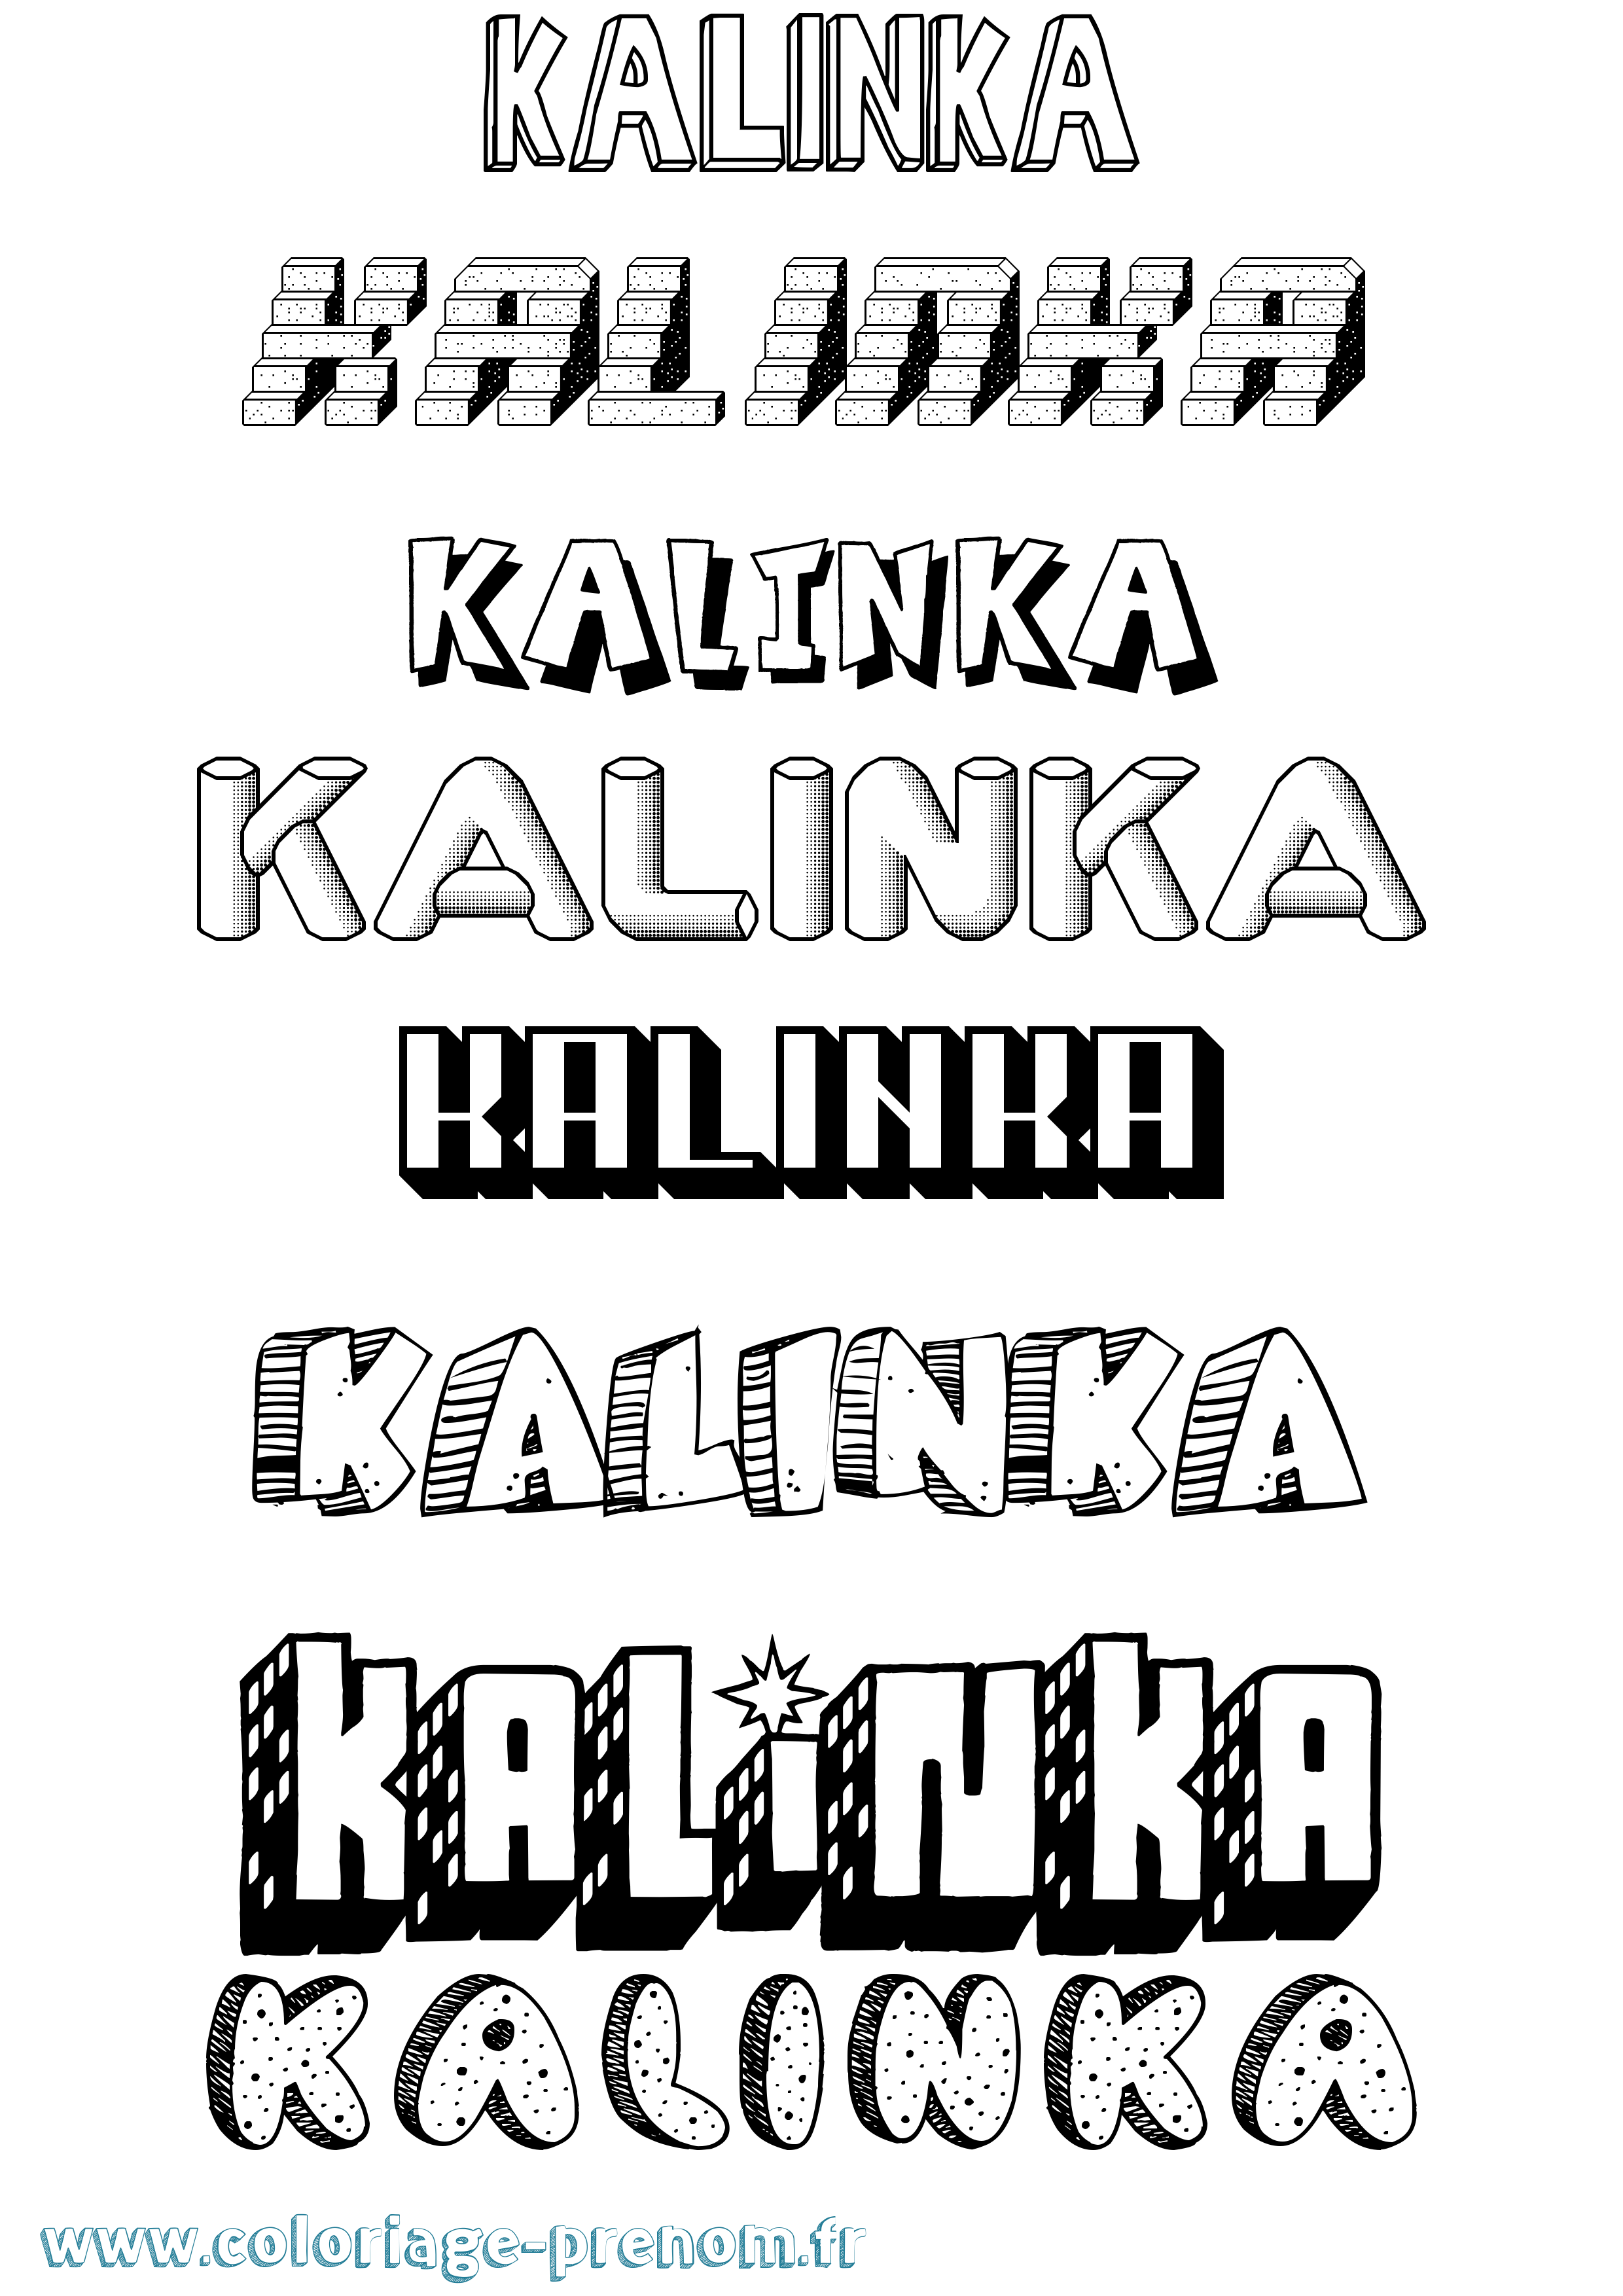 Coloriage prénom Kalinka Effet 3D